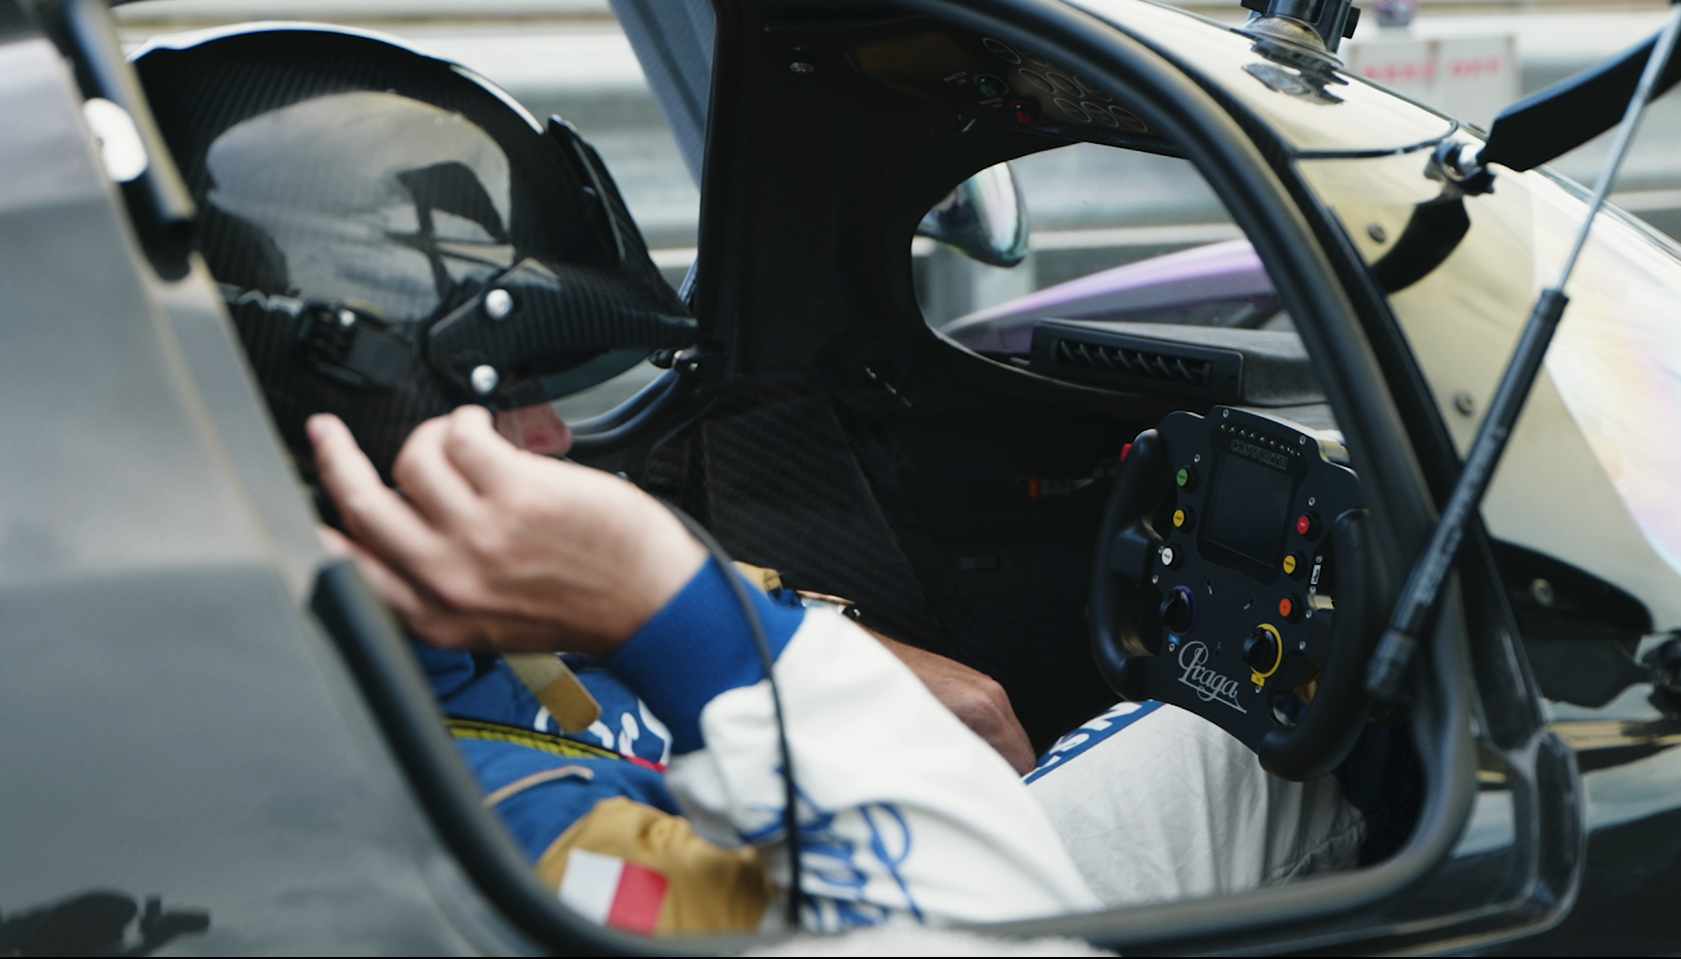 VIDEO: Ben Collins drives the R1 at Atlanta Motorsports Park